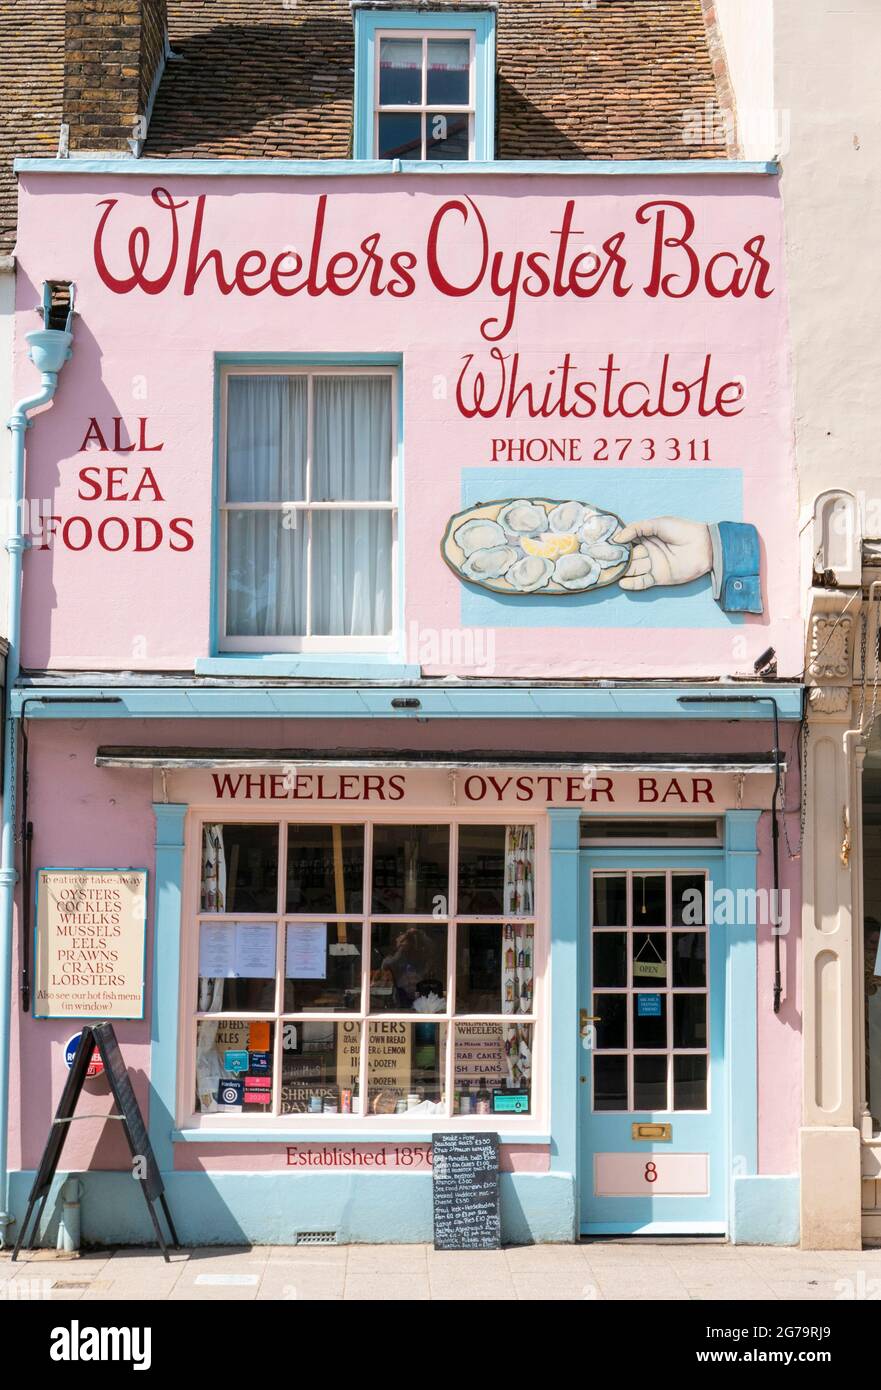 Wheelers Oyster Bar Whitstable High Street Whitstable Kent England UK GB Europe Foto Stock